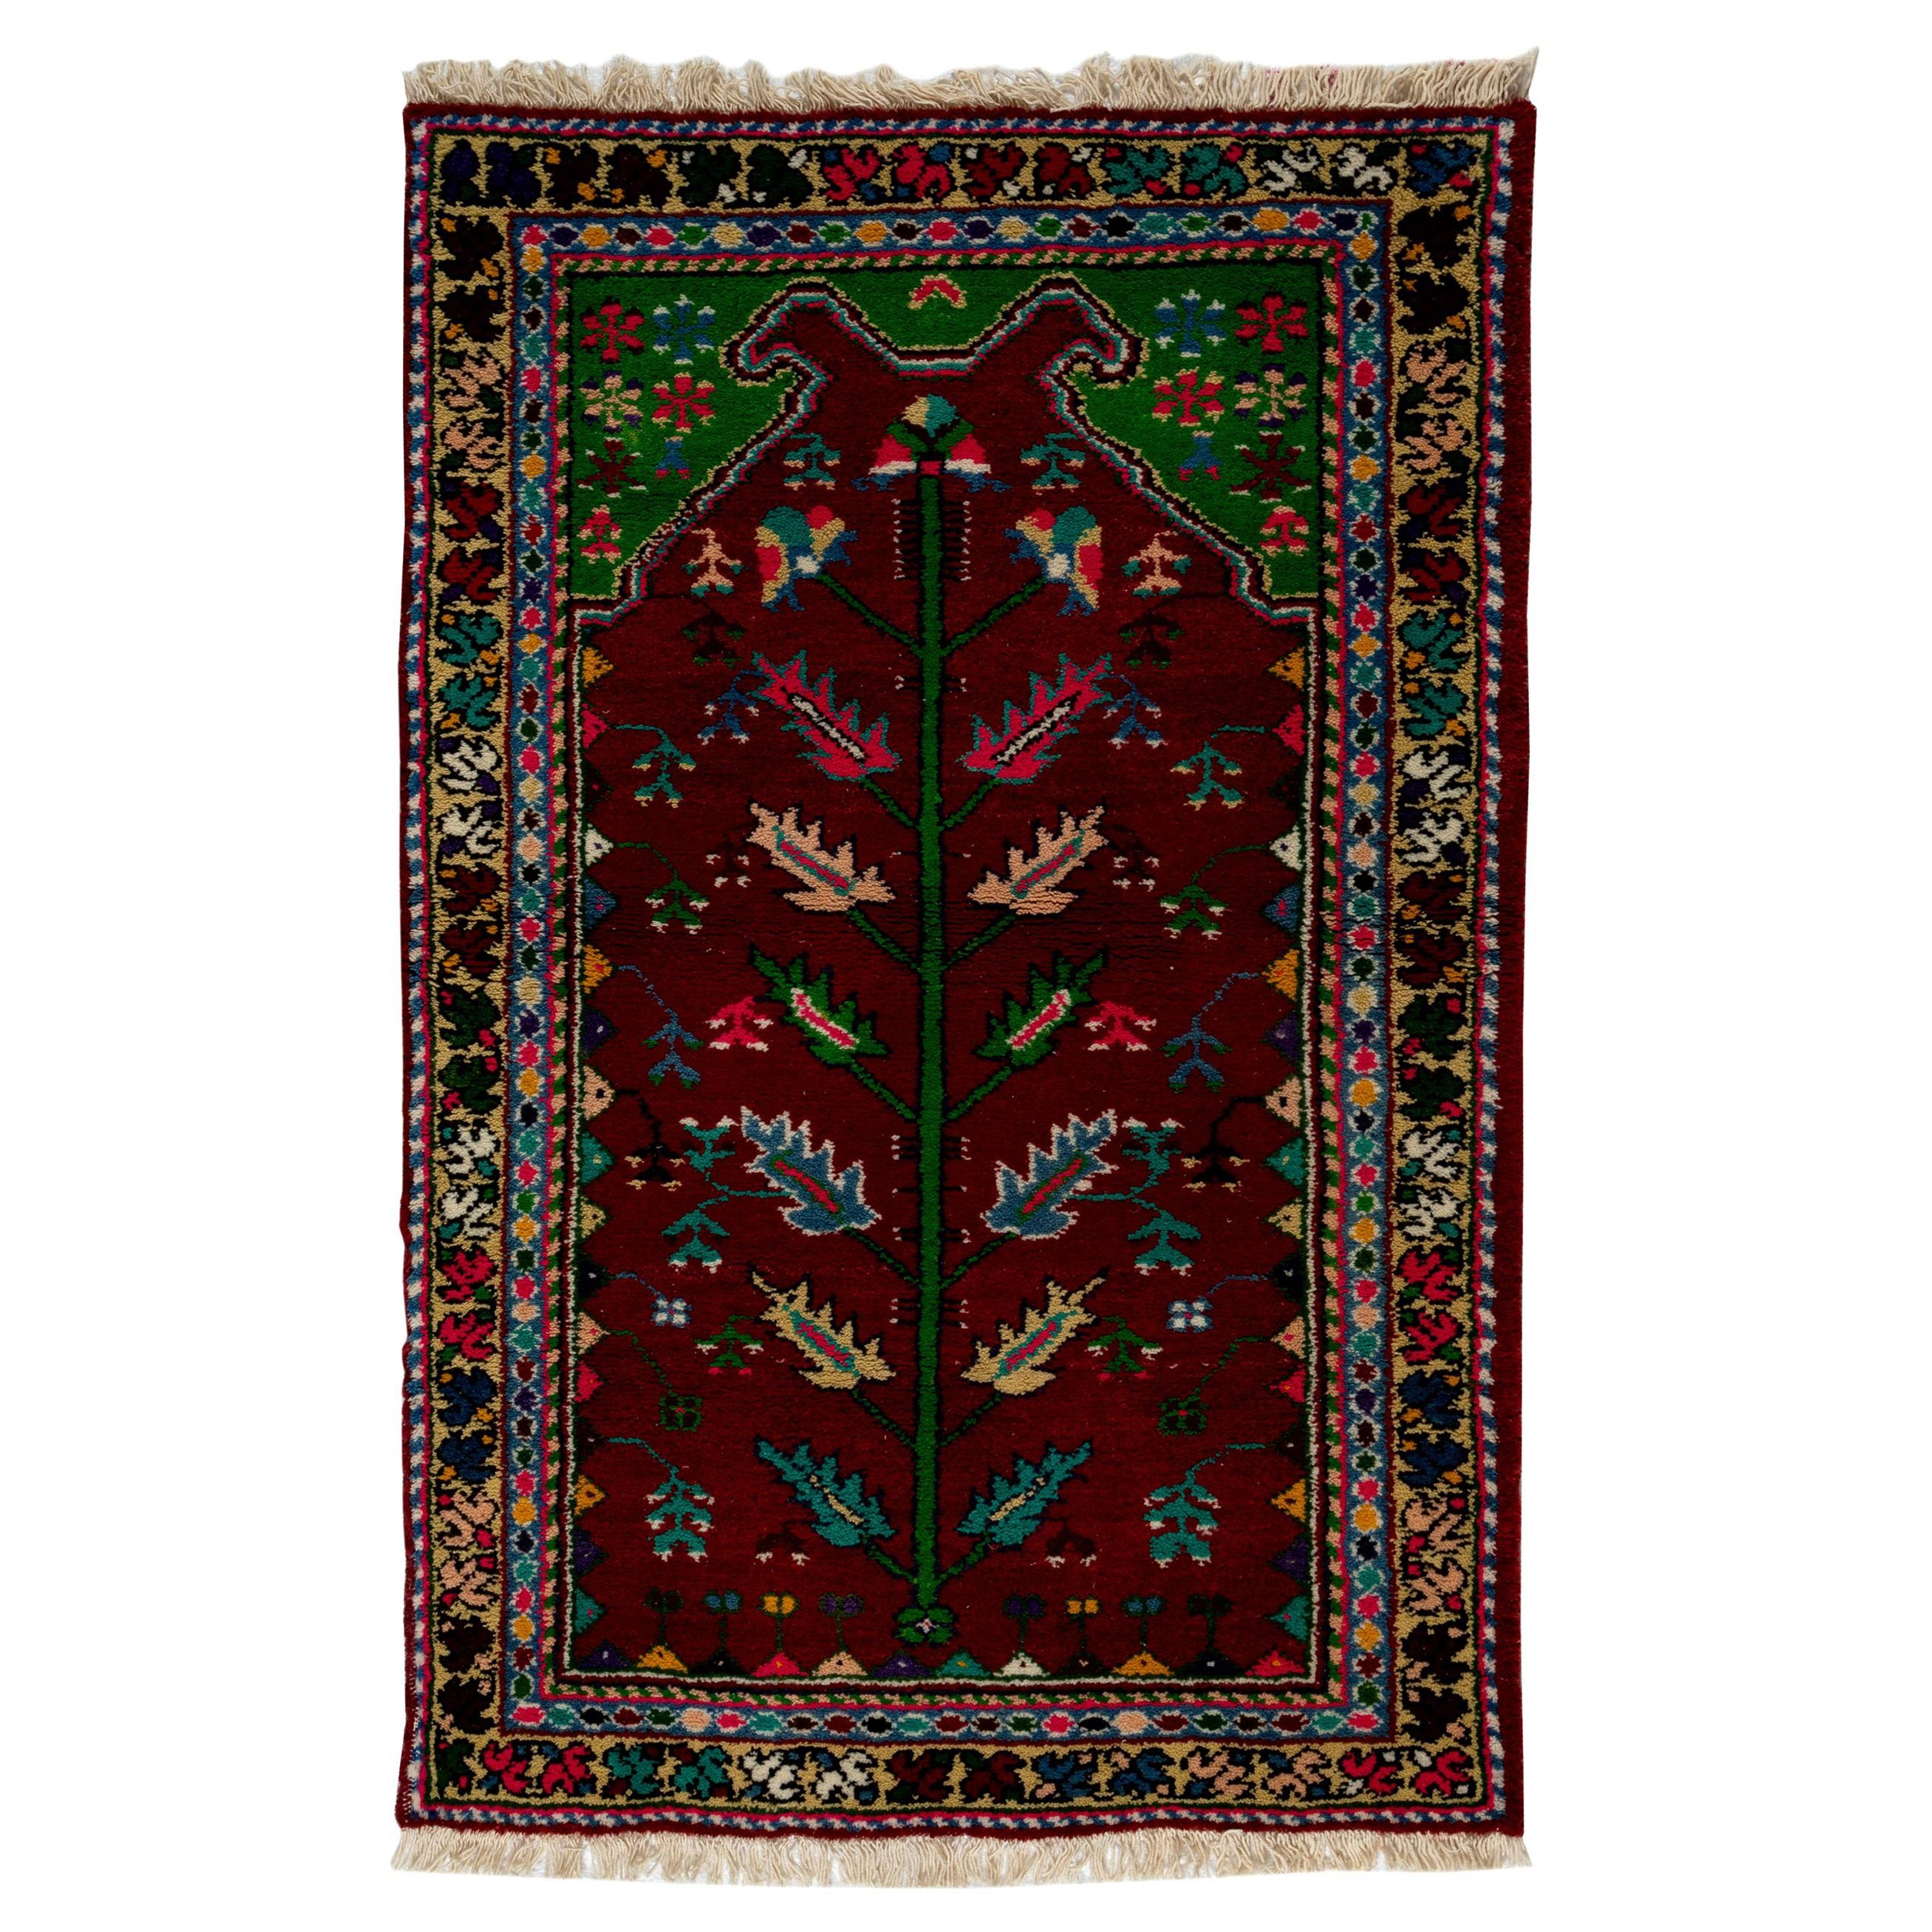 3x4.5 Ft Vintage Handmade Turkish Wool Accent Rug in Maroon, Beige, Blue & Pink